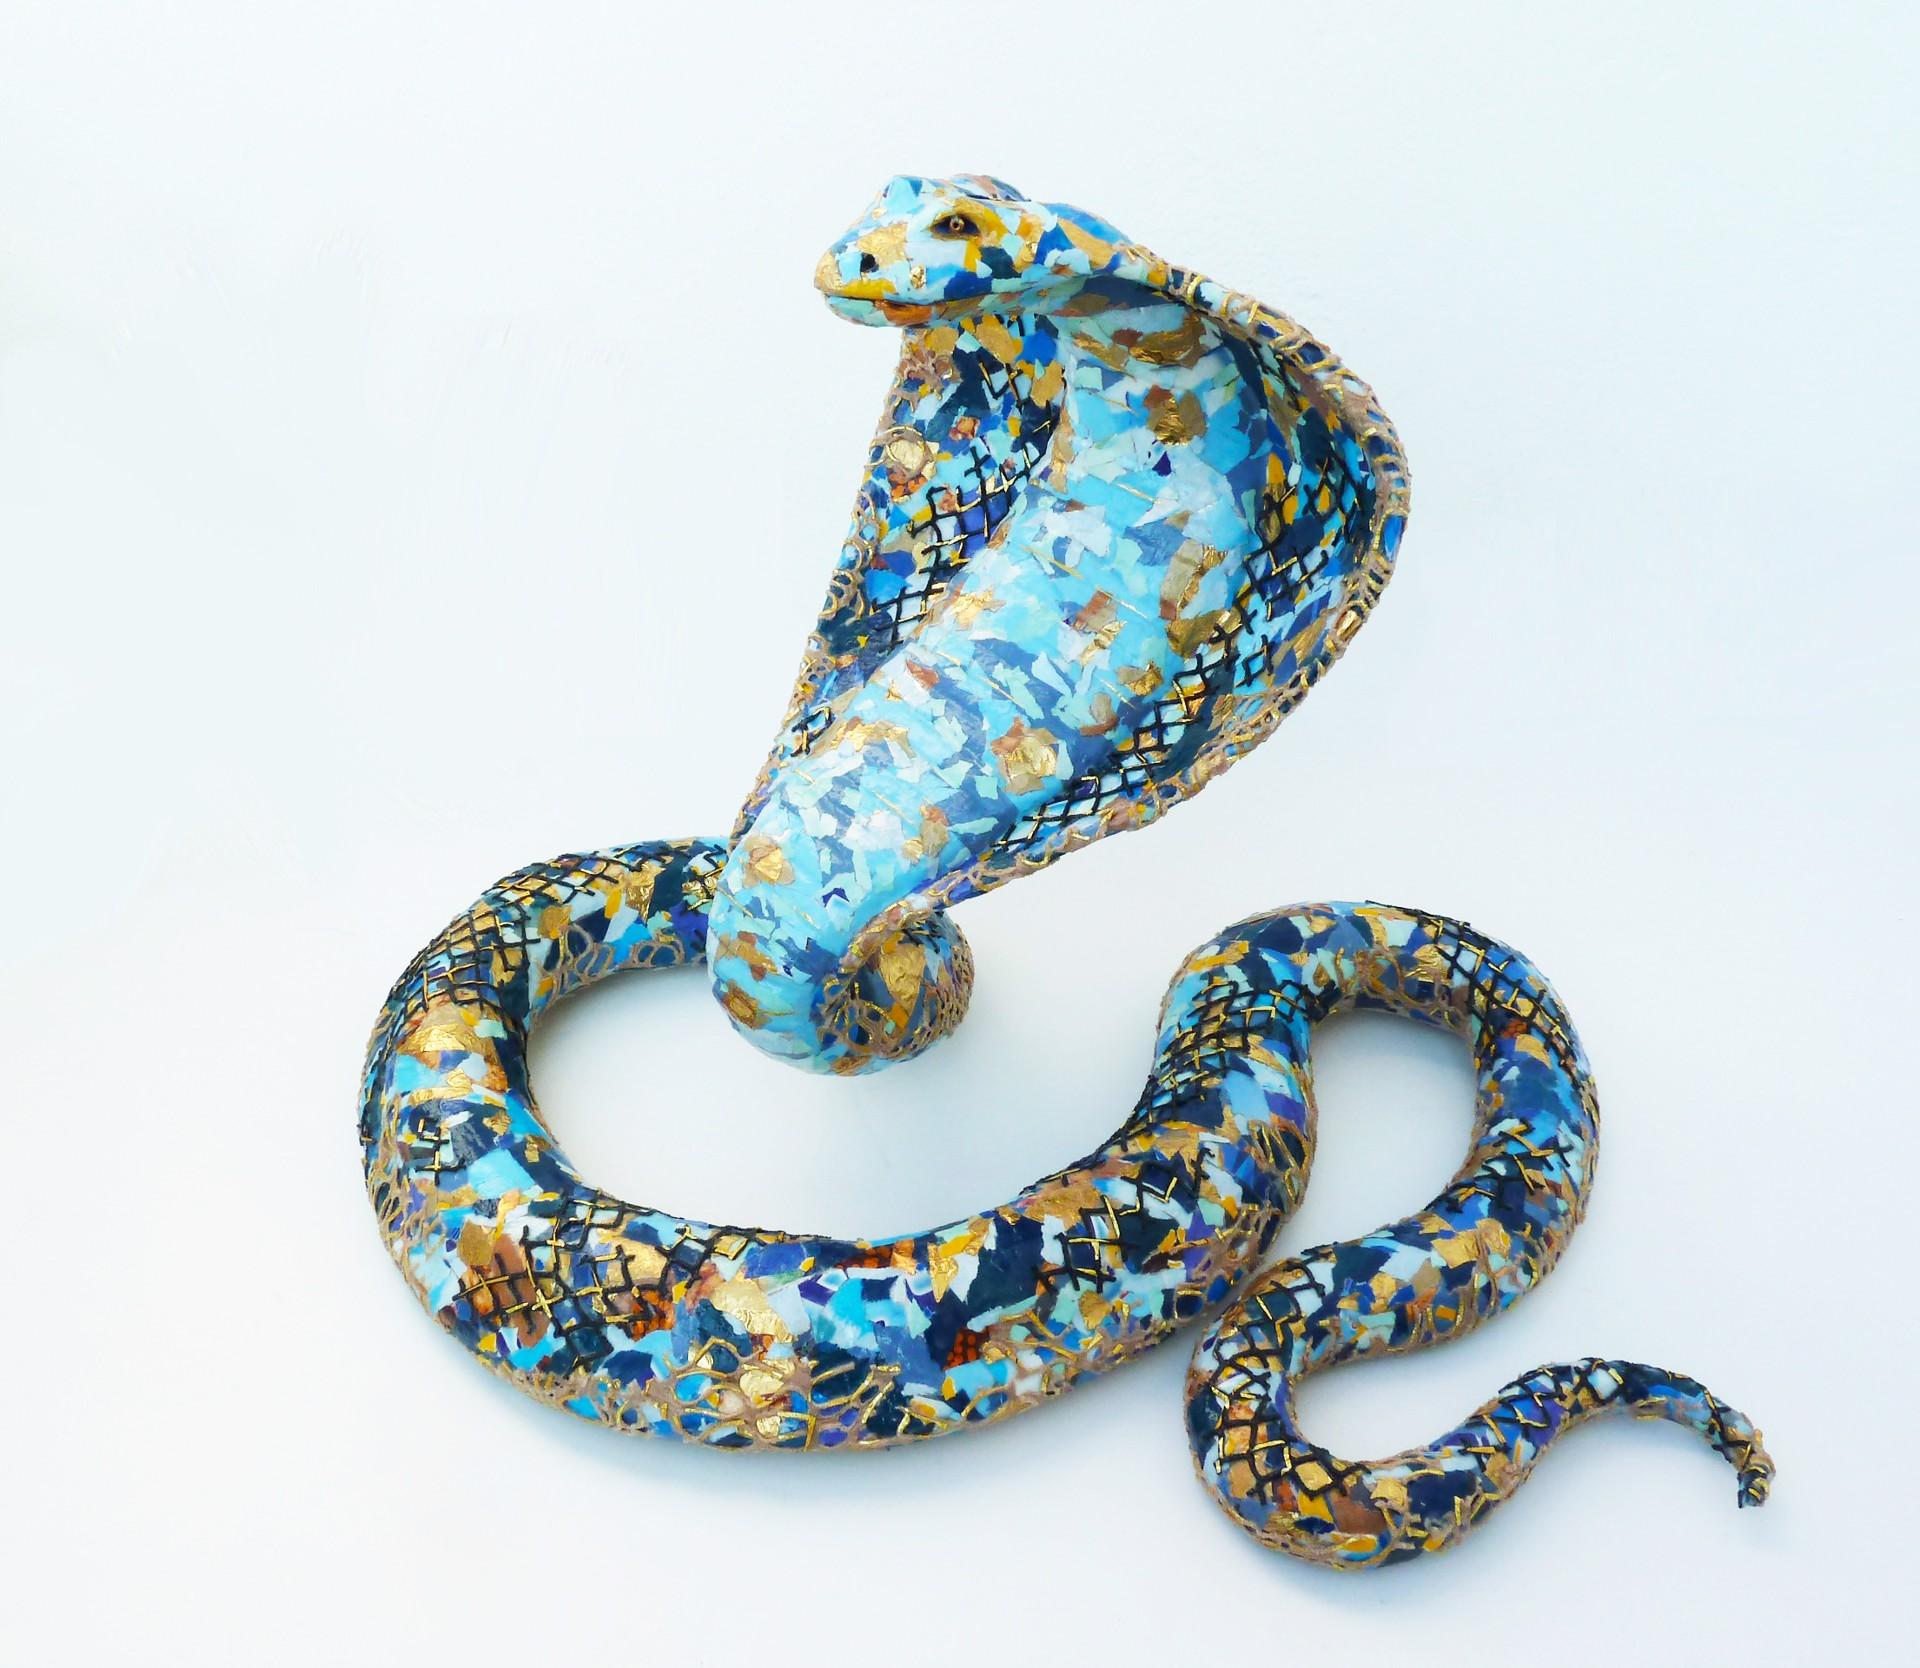 Kara the Cobra - Contemporary Snake Sculpture Upcylced Materials  (Blue + Gold) - Mixed Media Art by Yulia Shtern